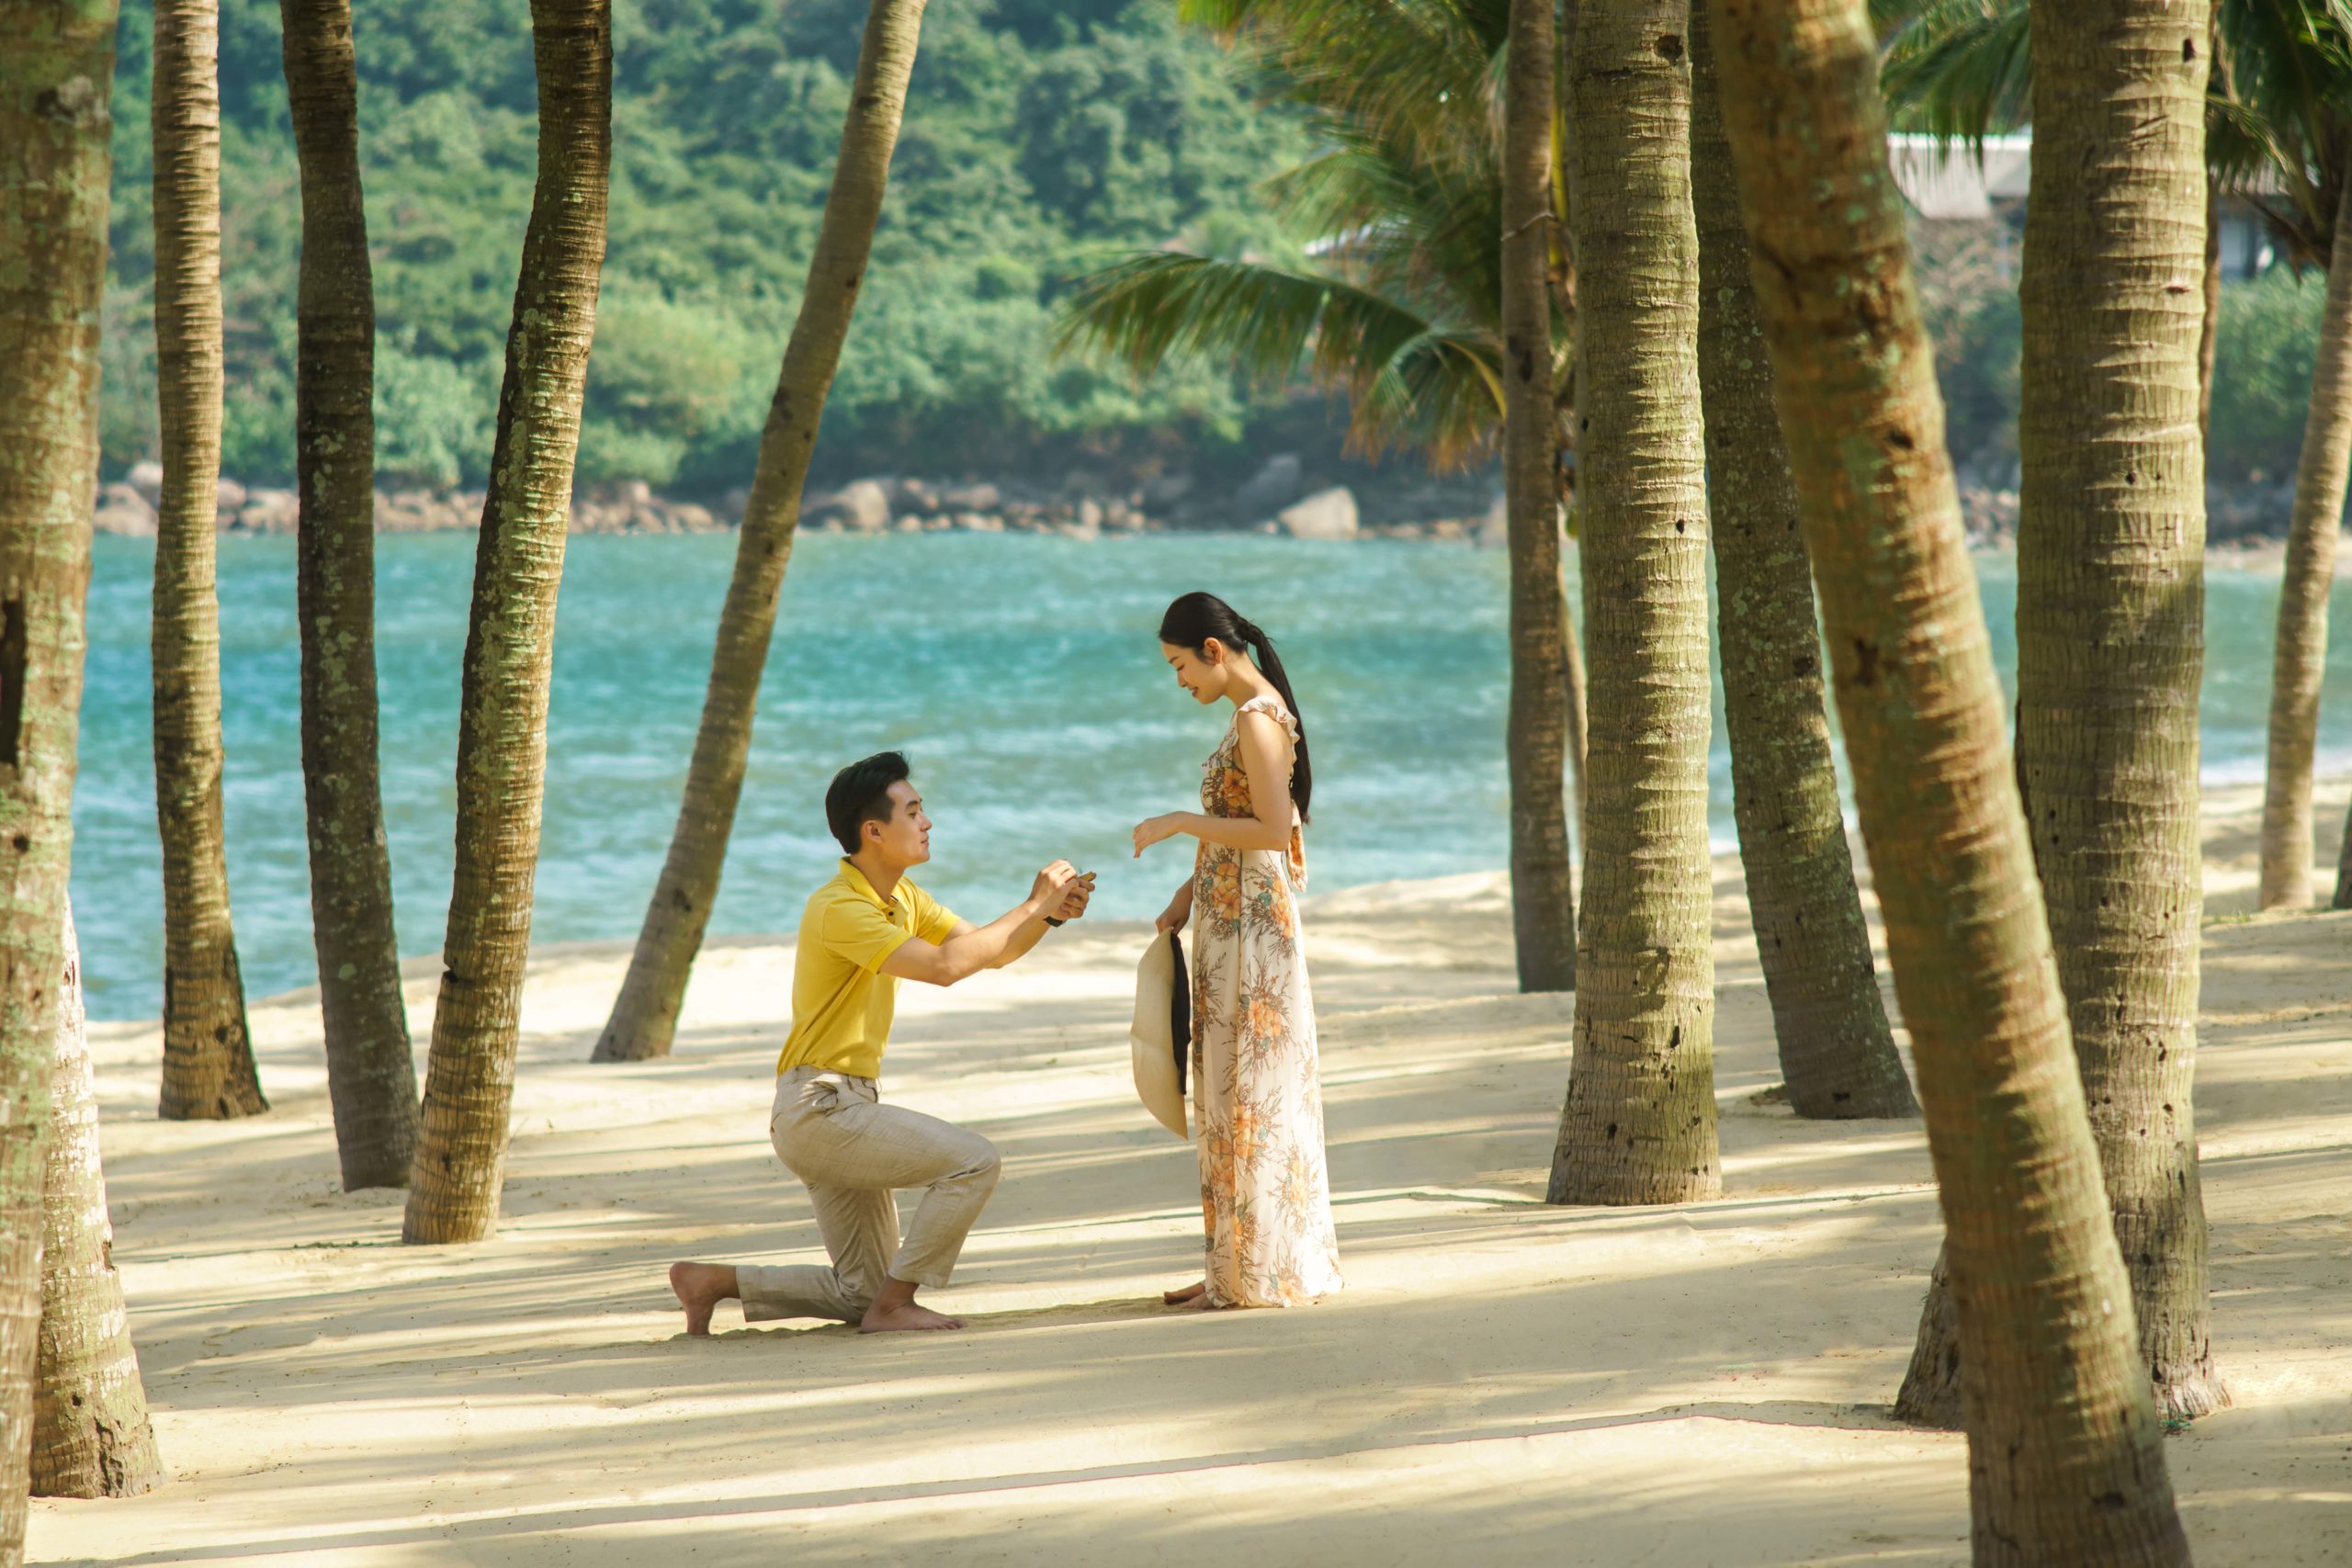 Say Yes! InterContinental Danang Sun Peninsula Resort creates spectacular proposal package